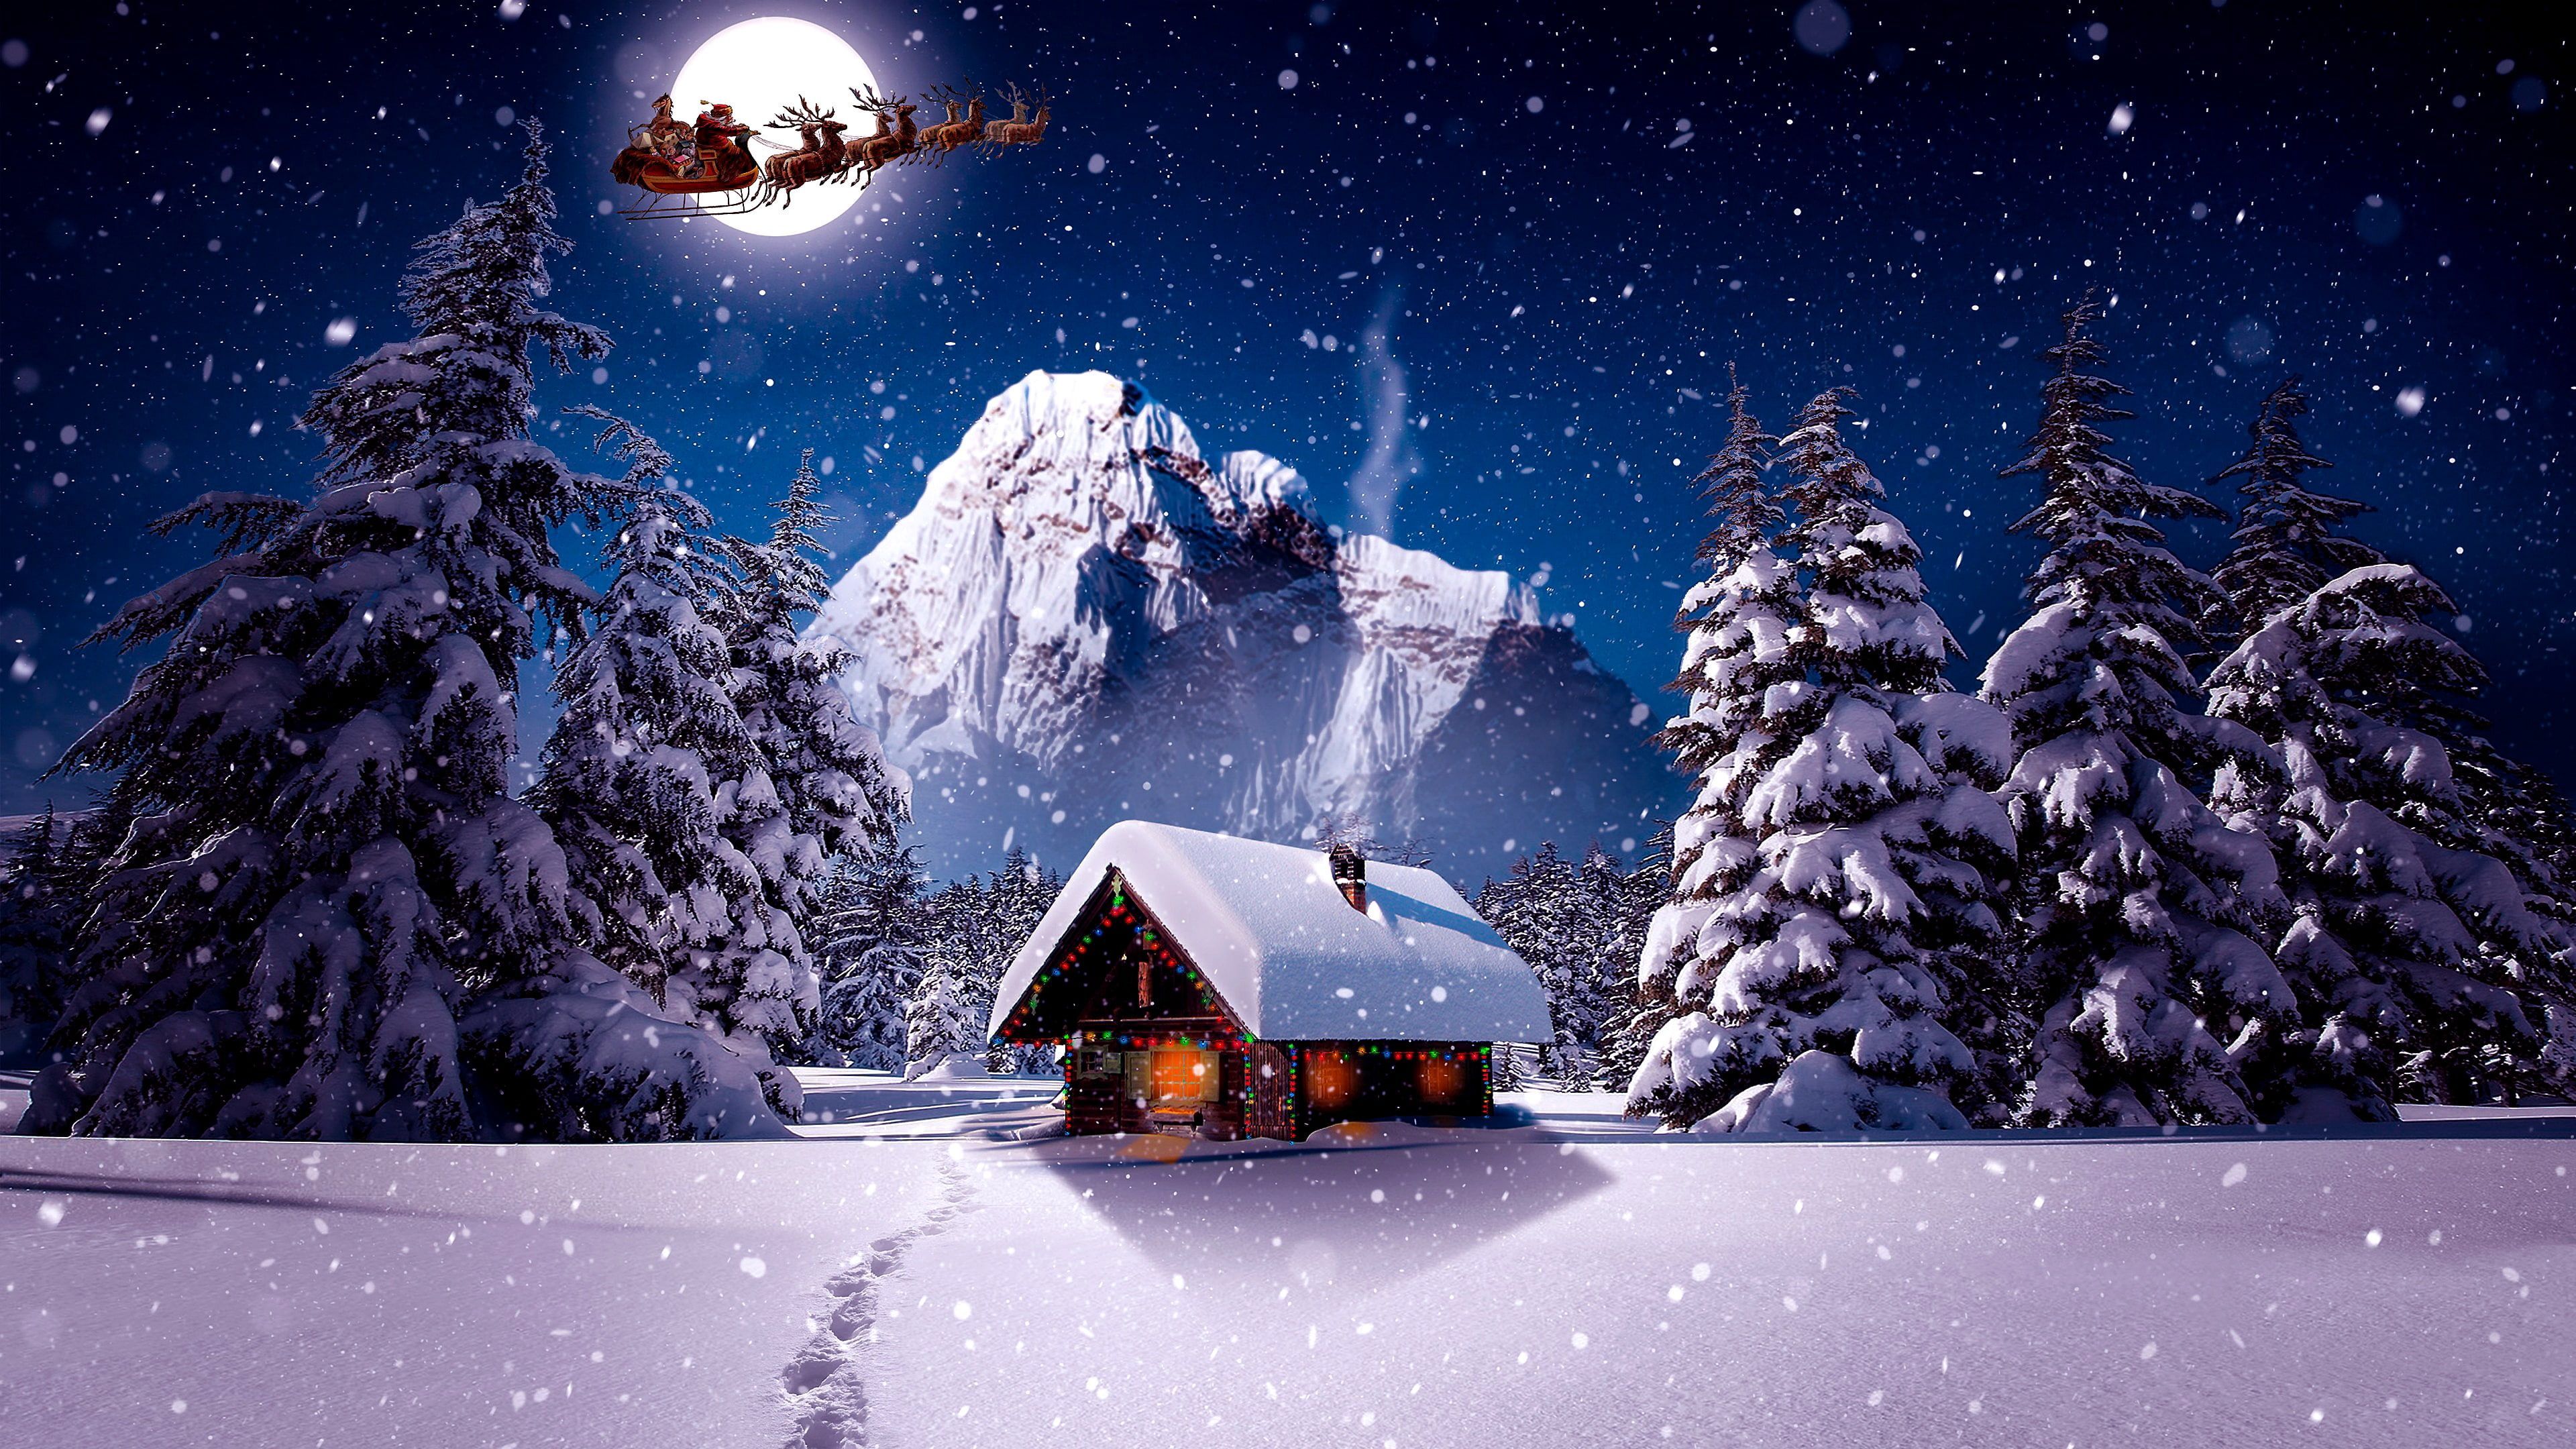 winter santa claus #sleigh #sledge #snow #snowing #moon log cabin #house #mountain christmas night #chistmas. Wallpaper, Christmas wallpaper, Nature wallpaper